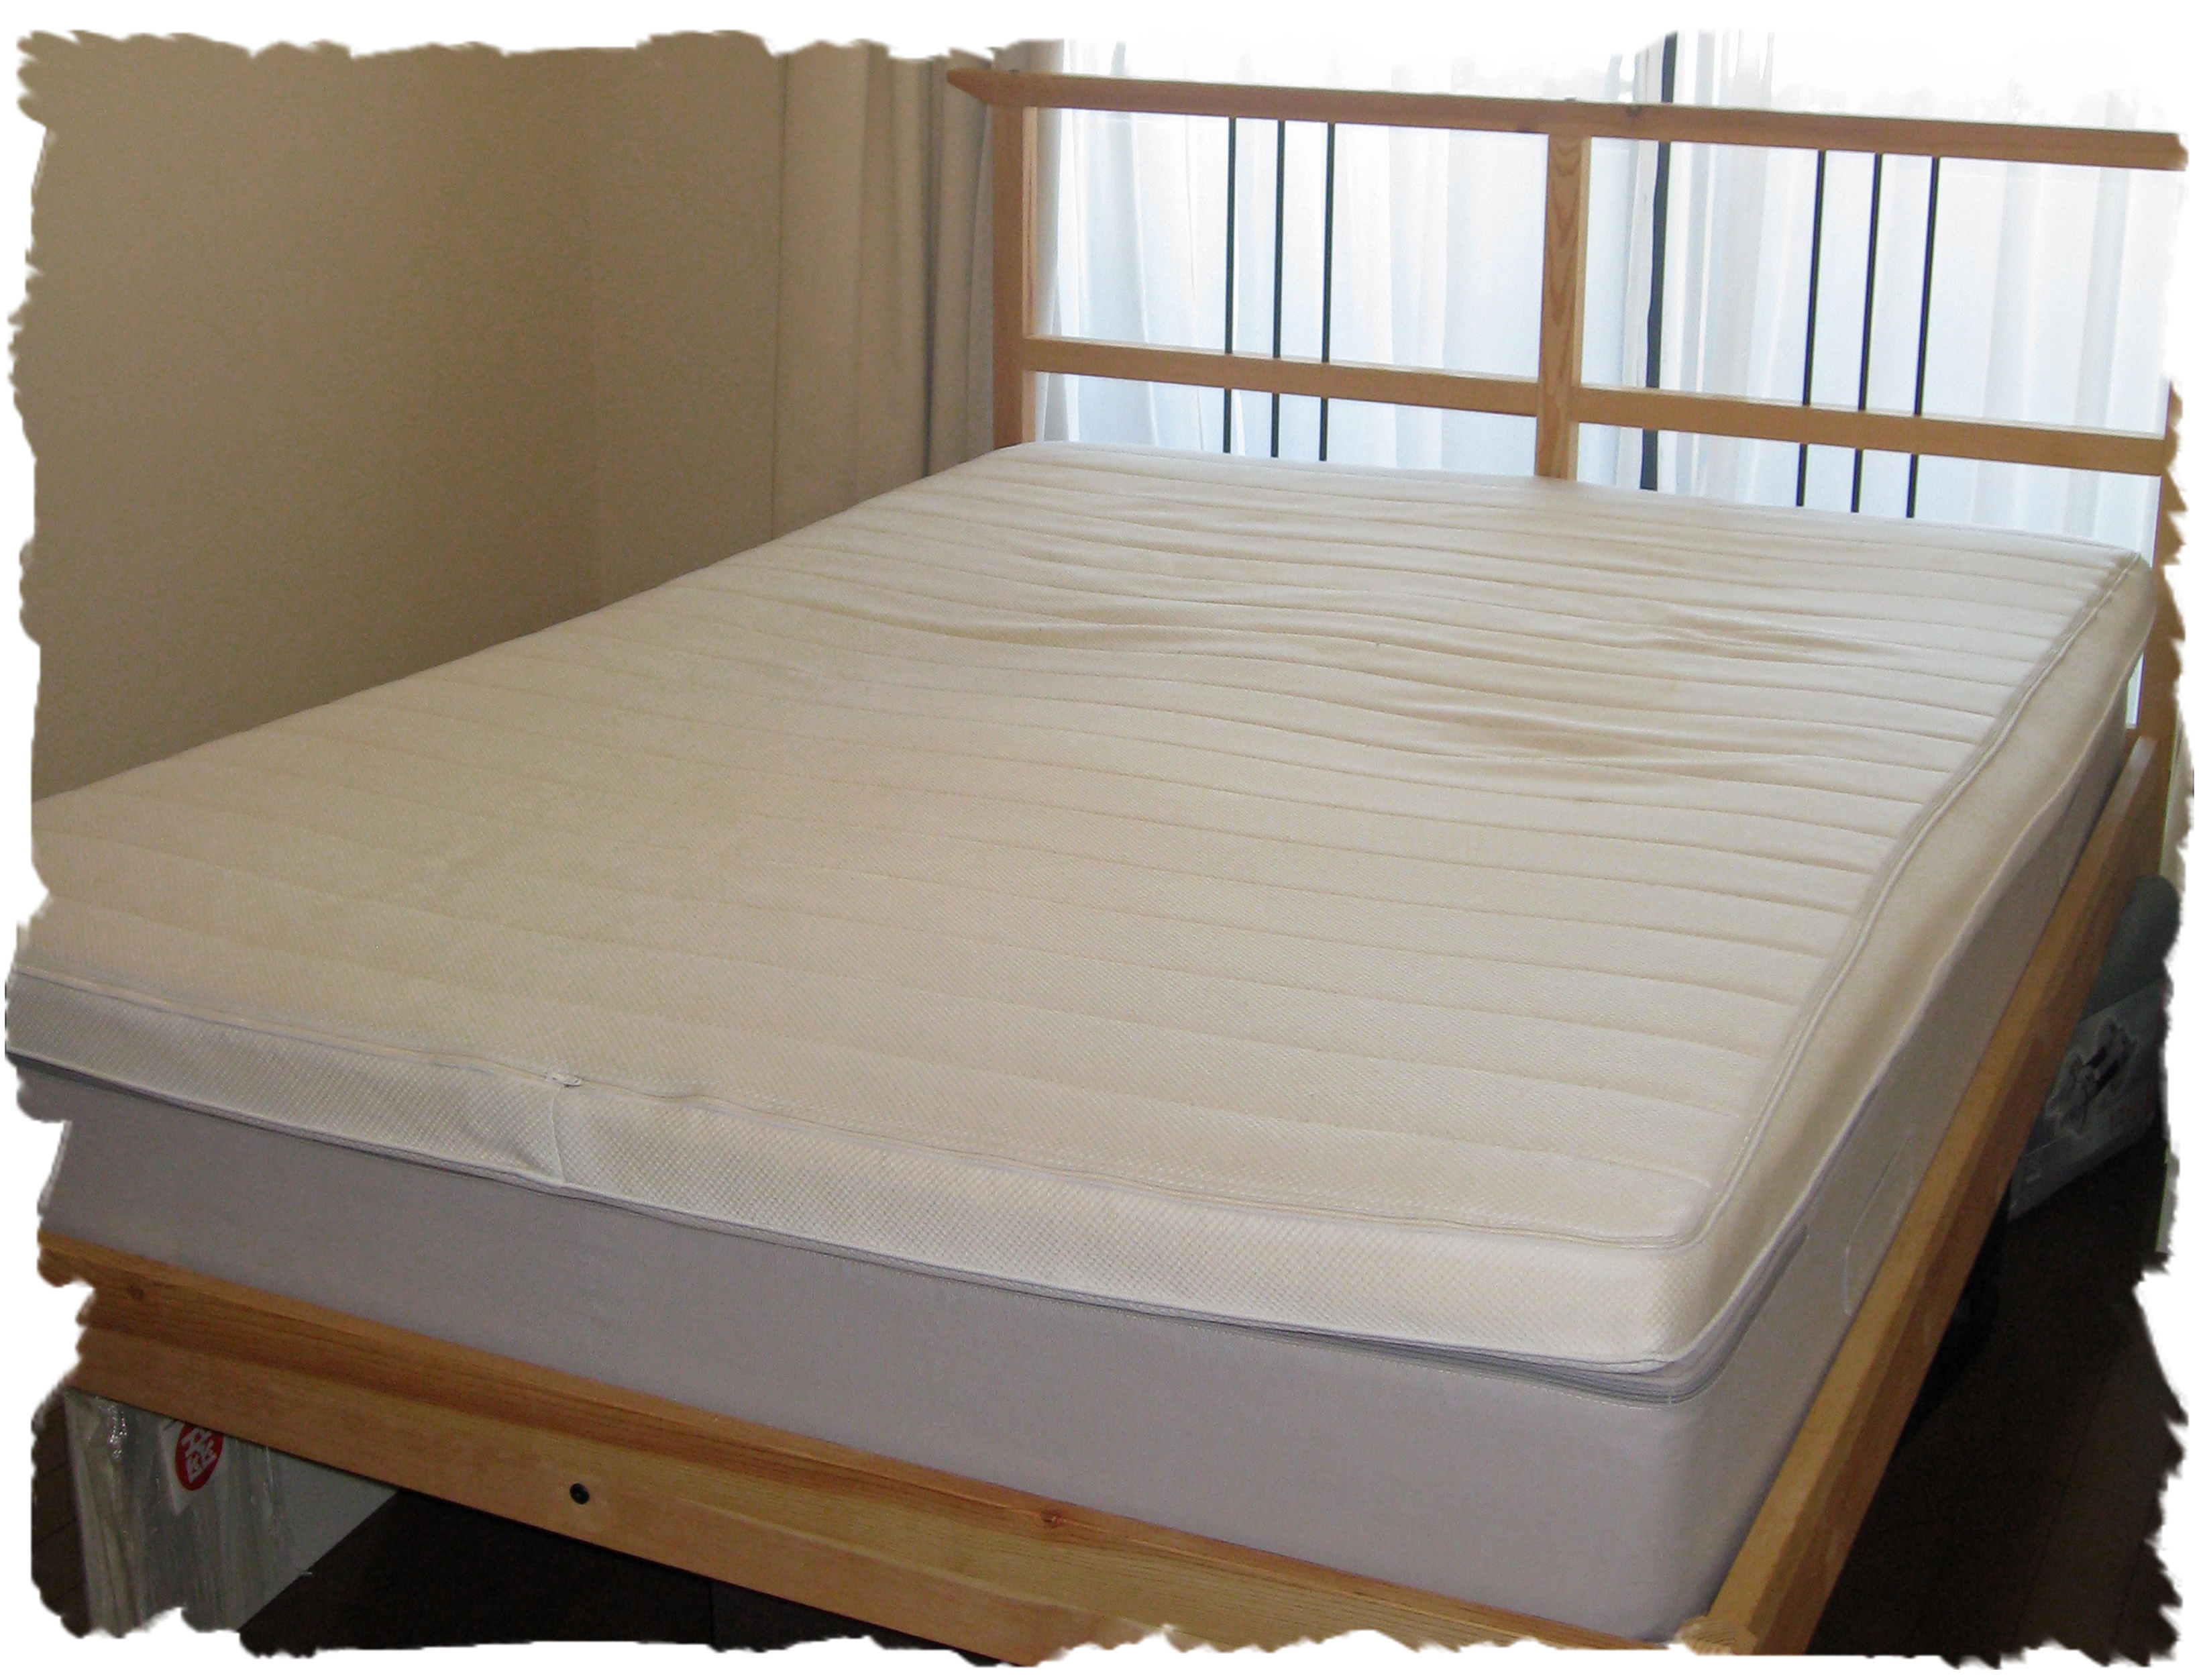 IKEA Double Bed SOLD Sayonara Roppongi Hills